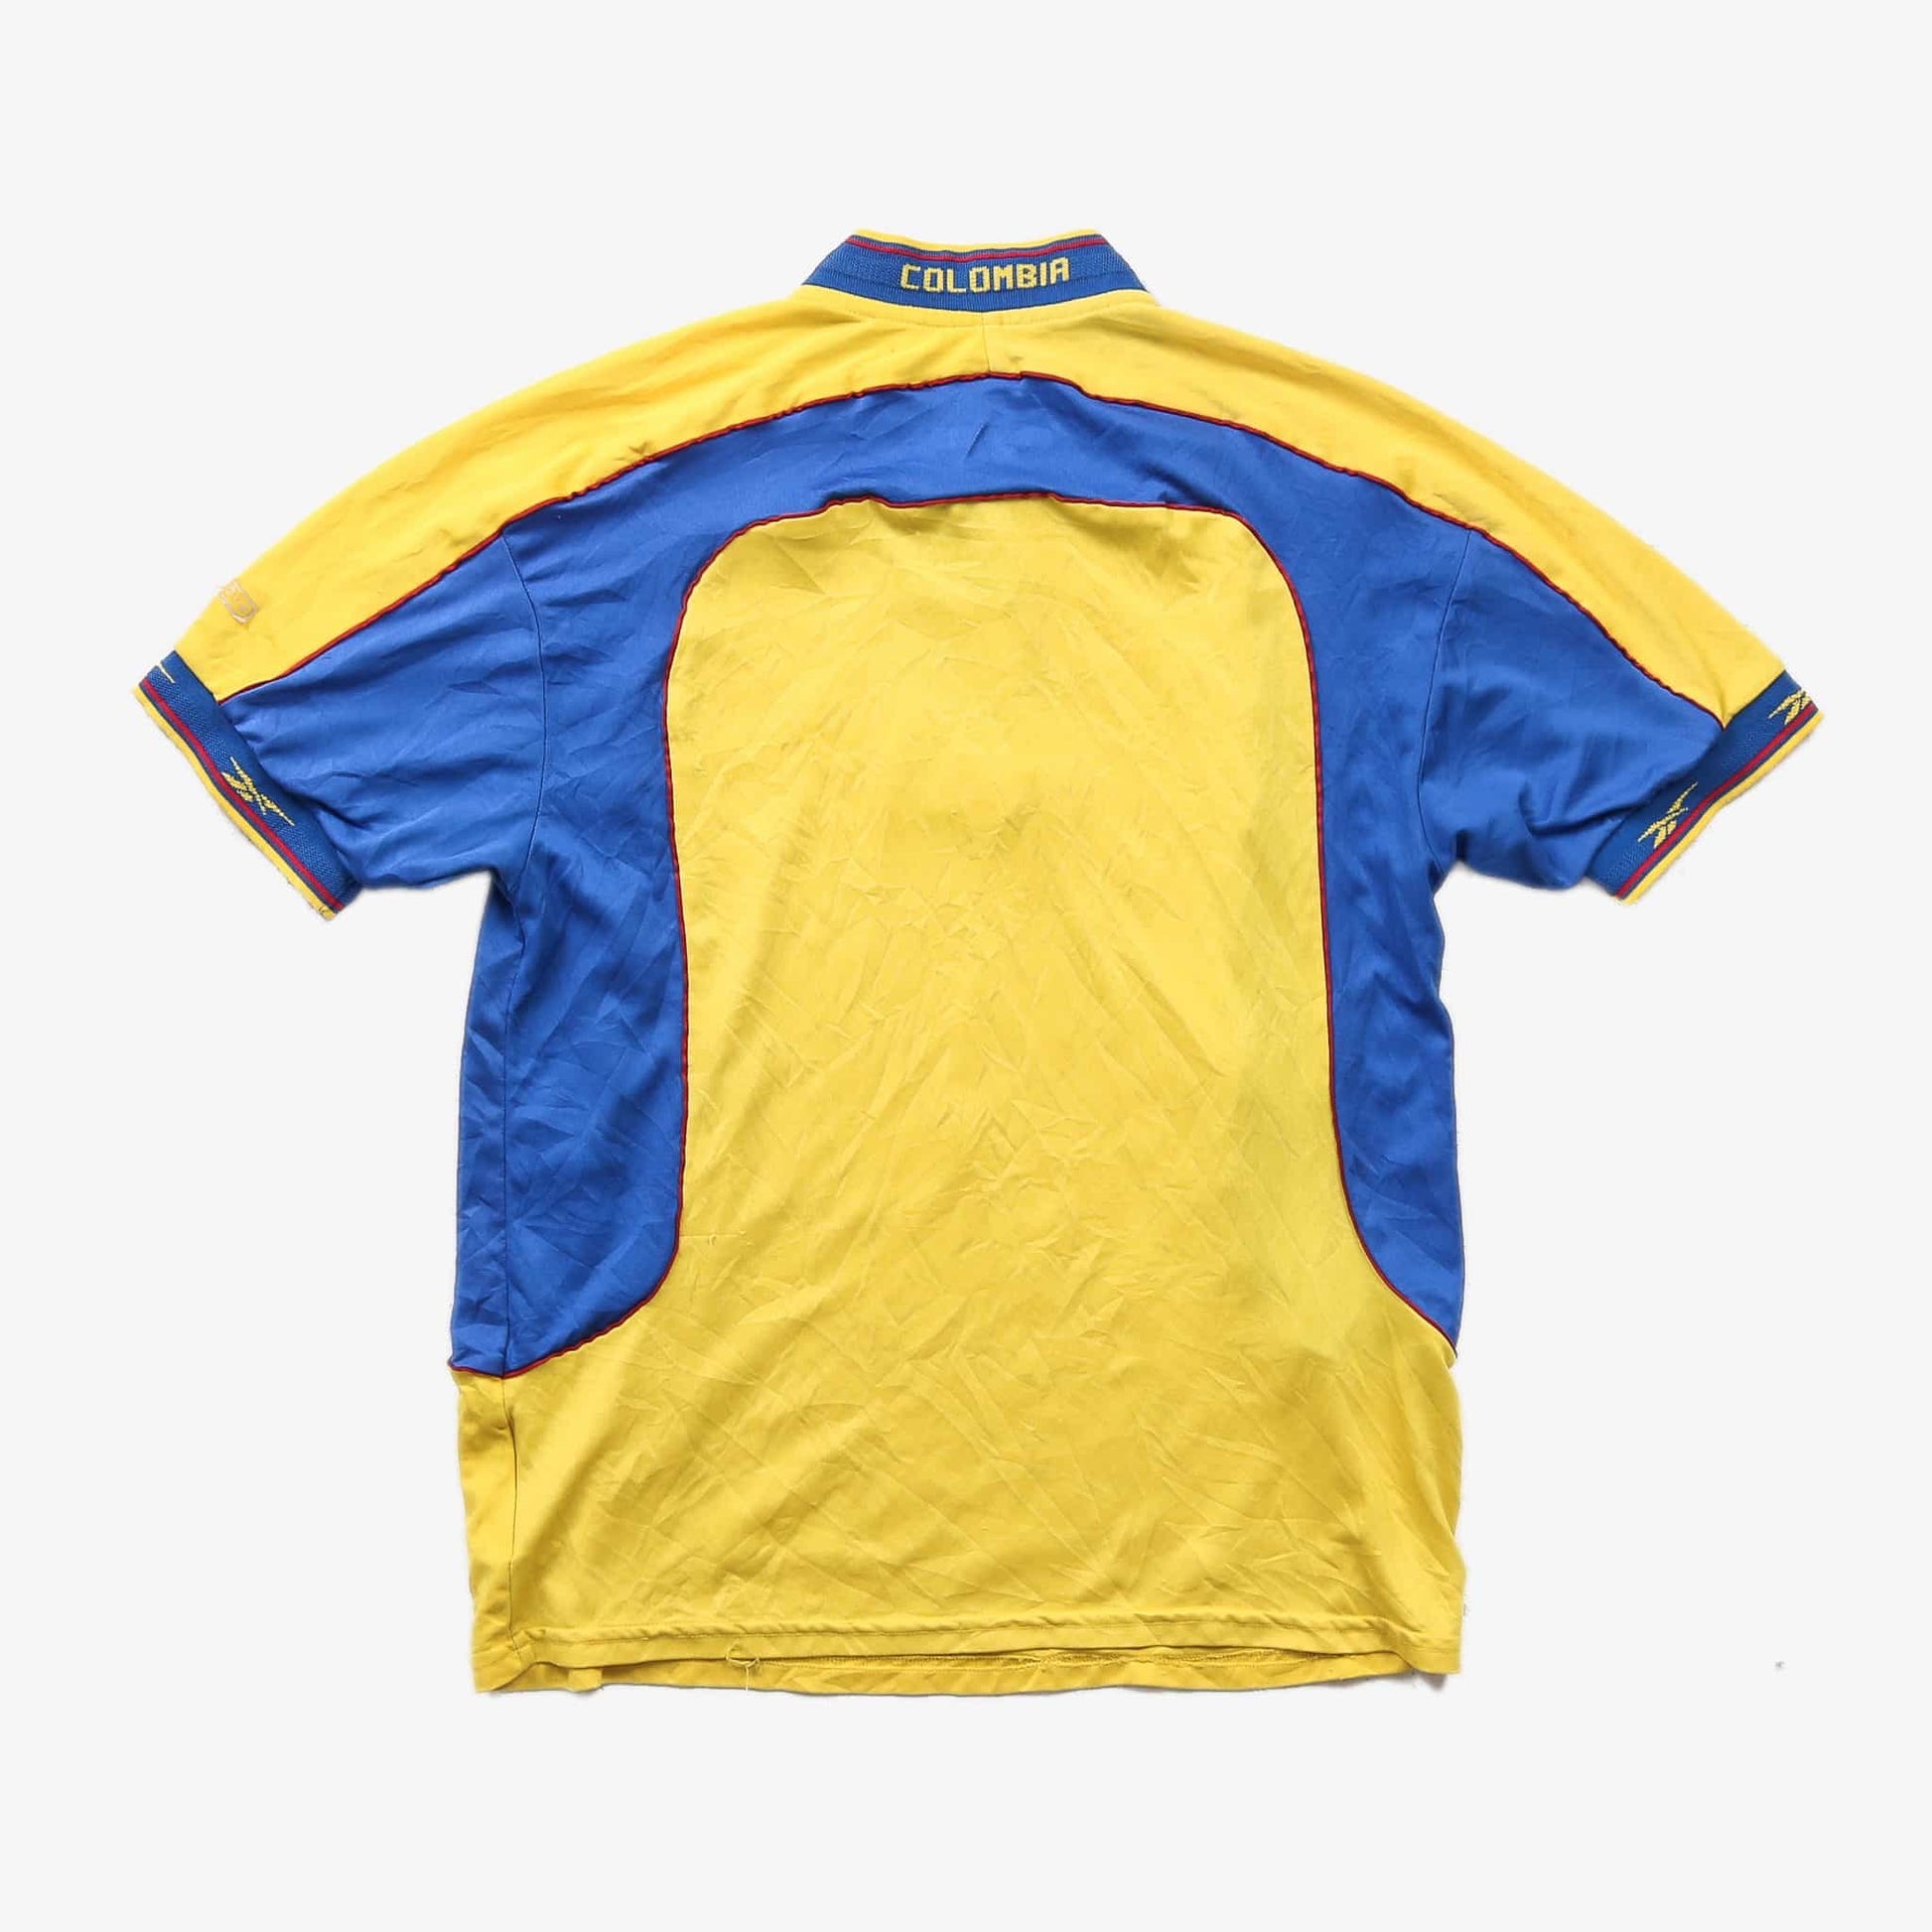 Columbia Football Shirt - American Madness